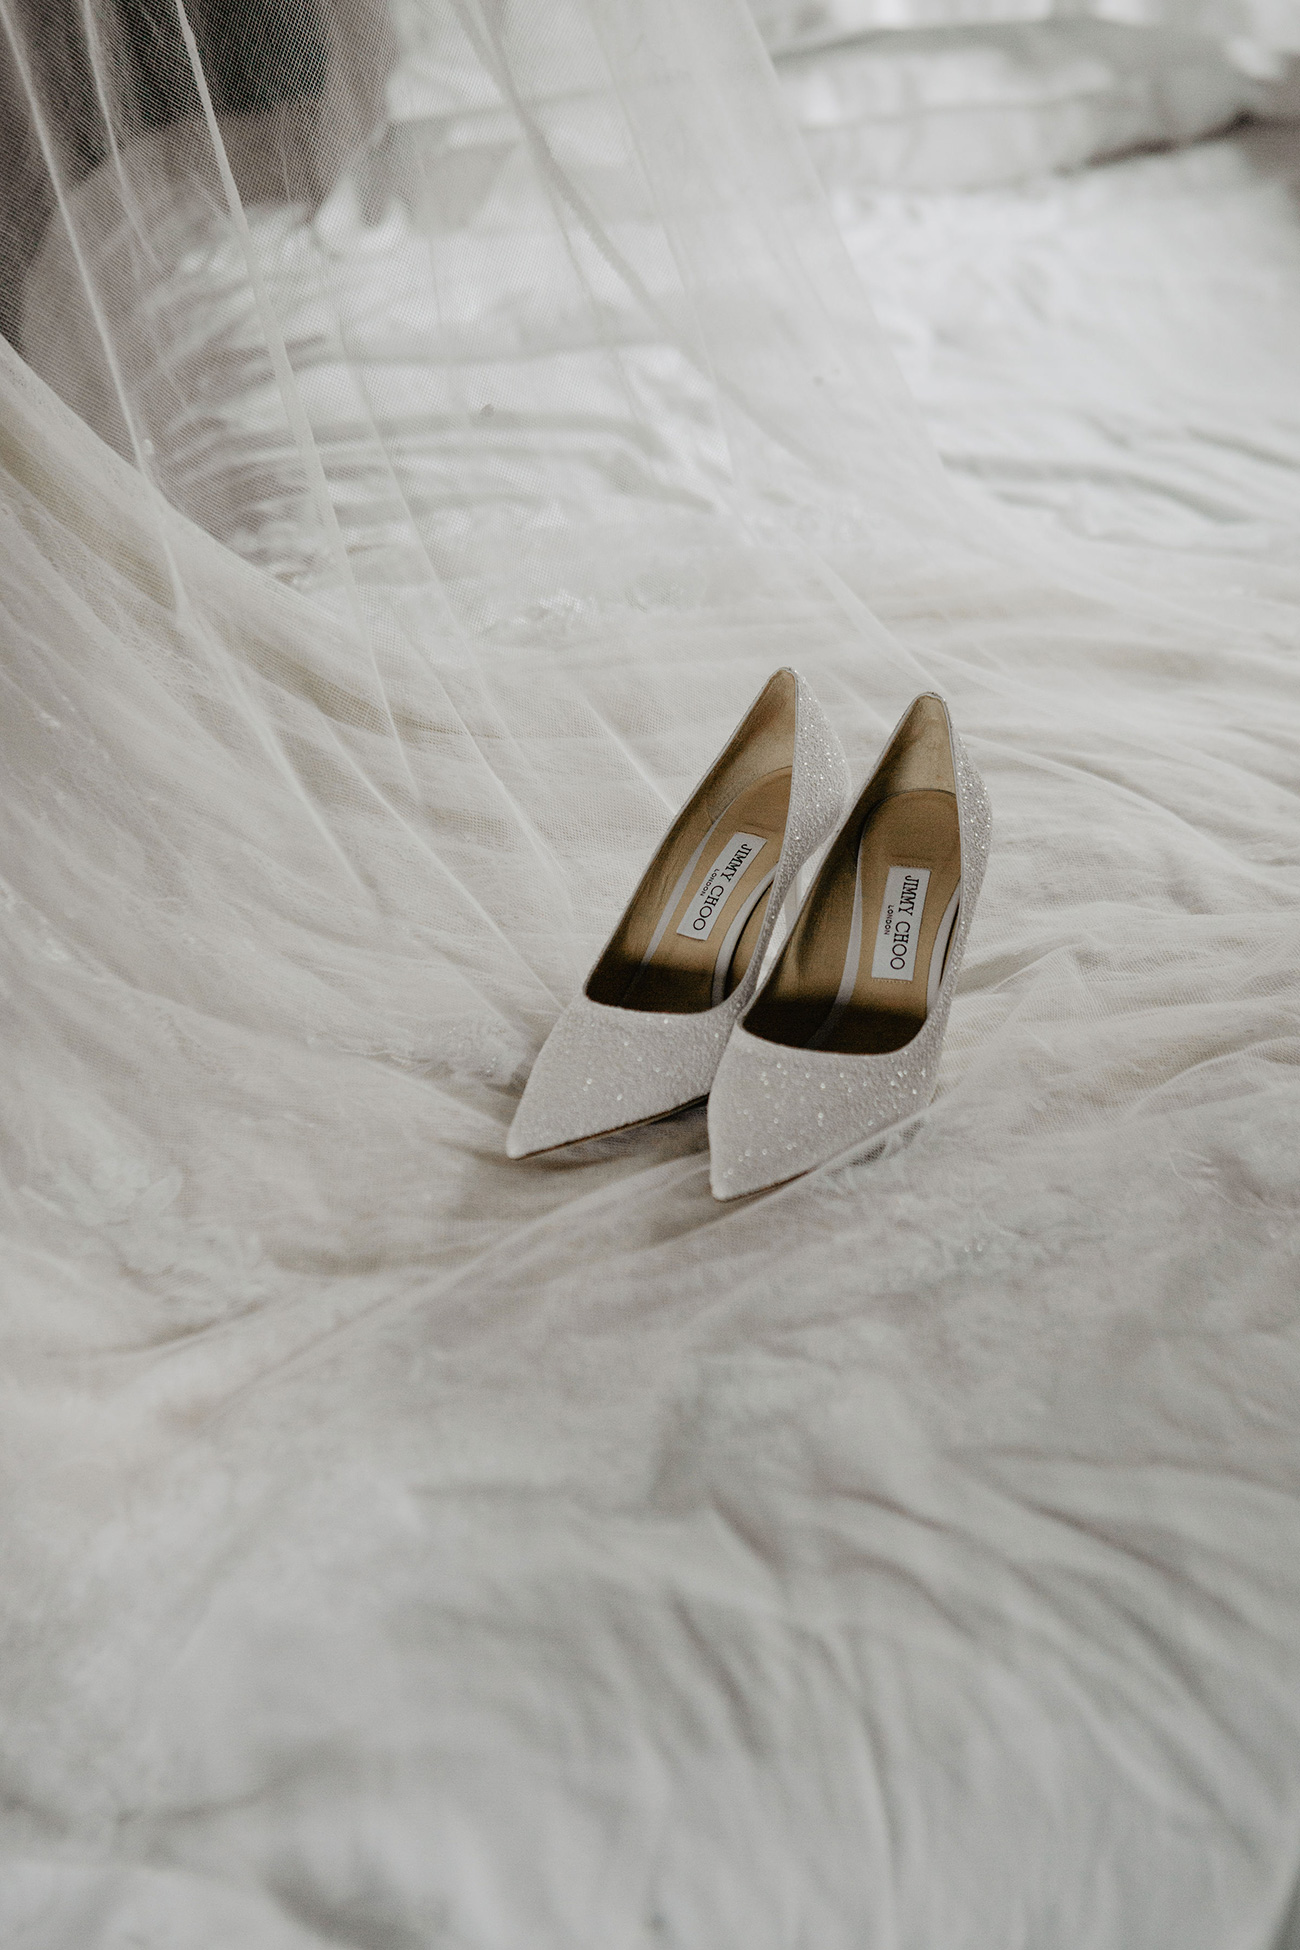 Real Wedding Trevenna Shoes